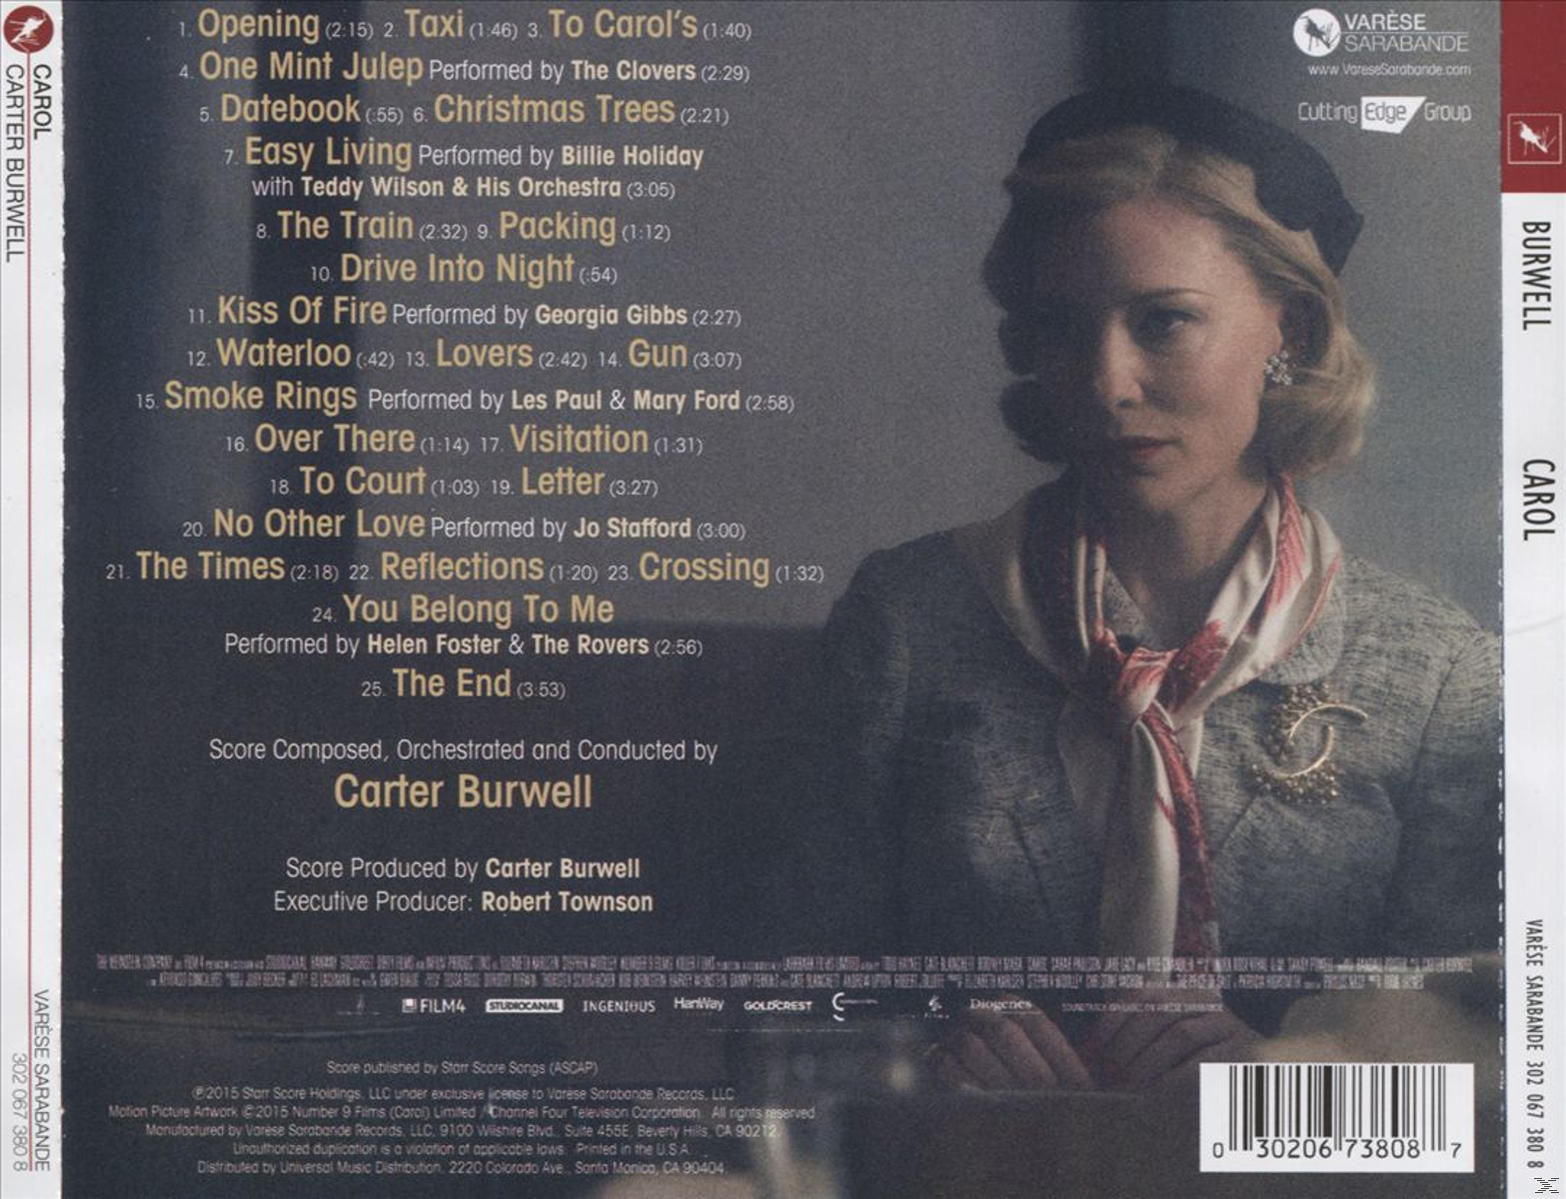 VARIOUS - Carol-Original Motion - Picture Soundtrack (CD)